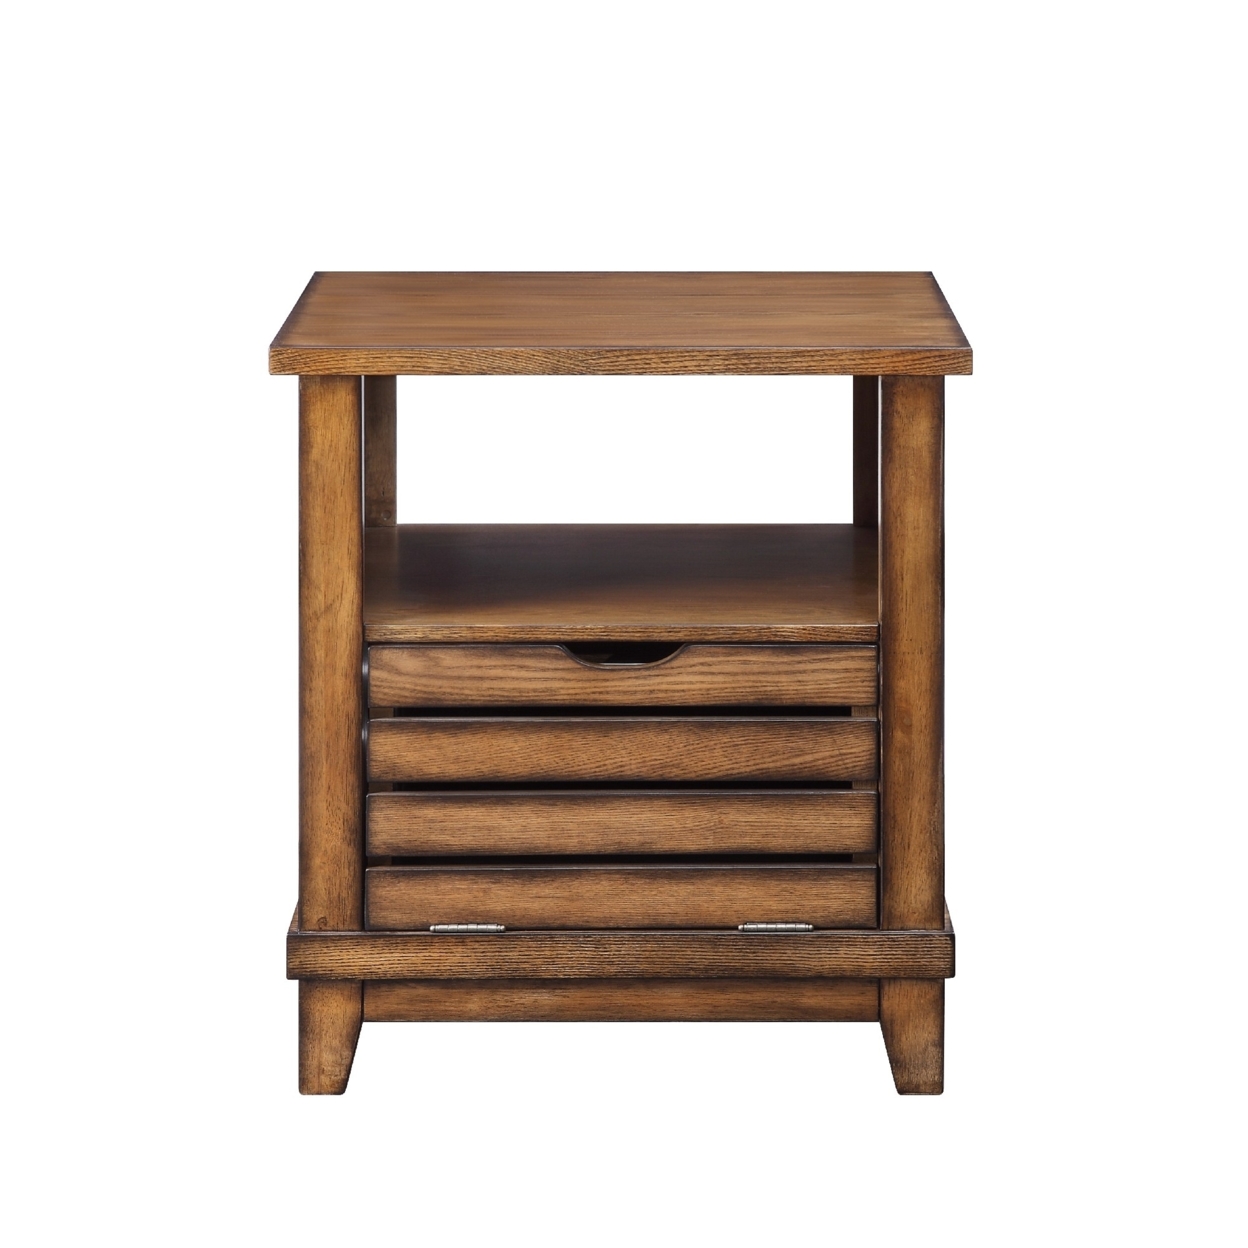 Open Top Contemporary Wooden Contemporary Style End Table, Brown- Saltoro Sherpi